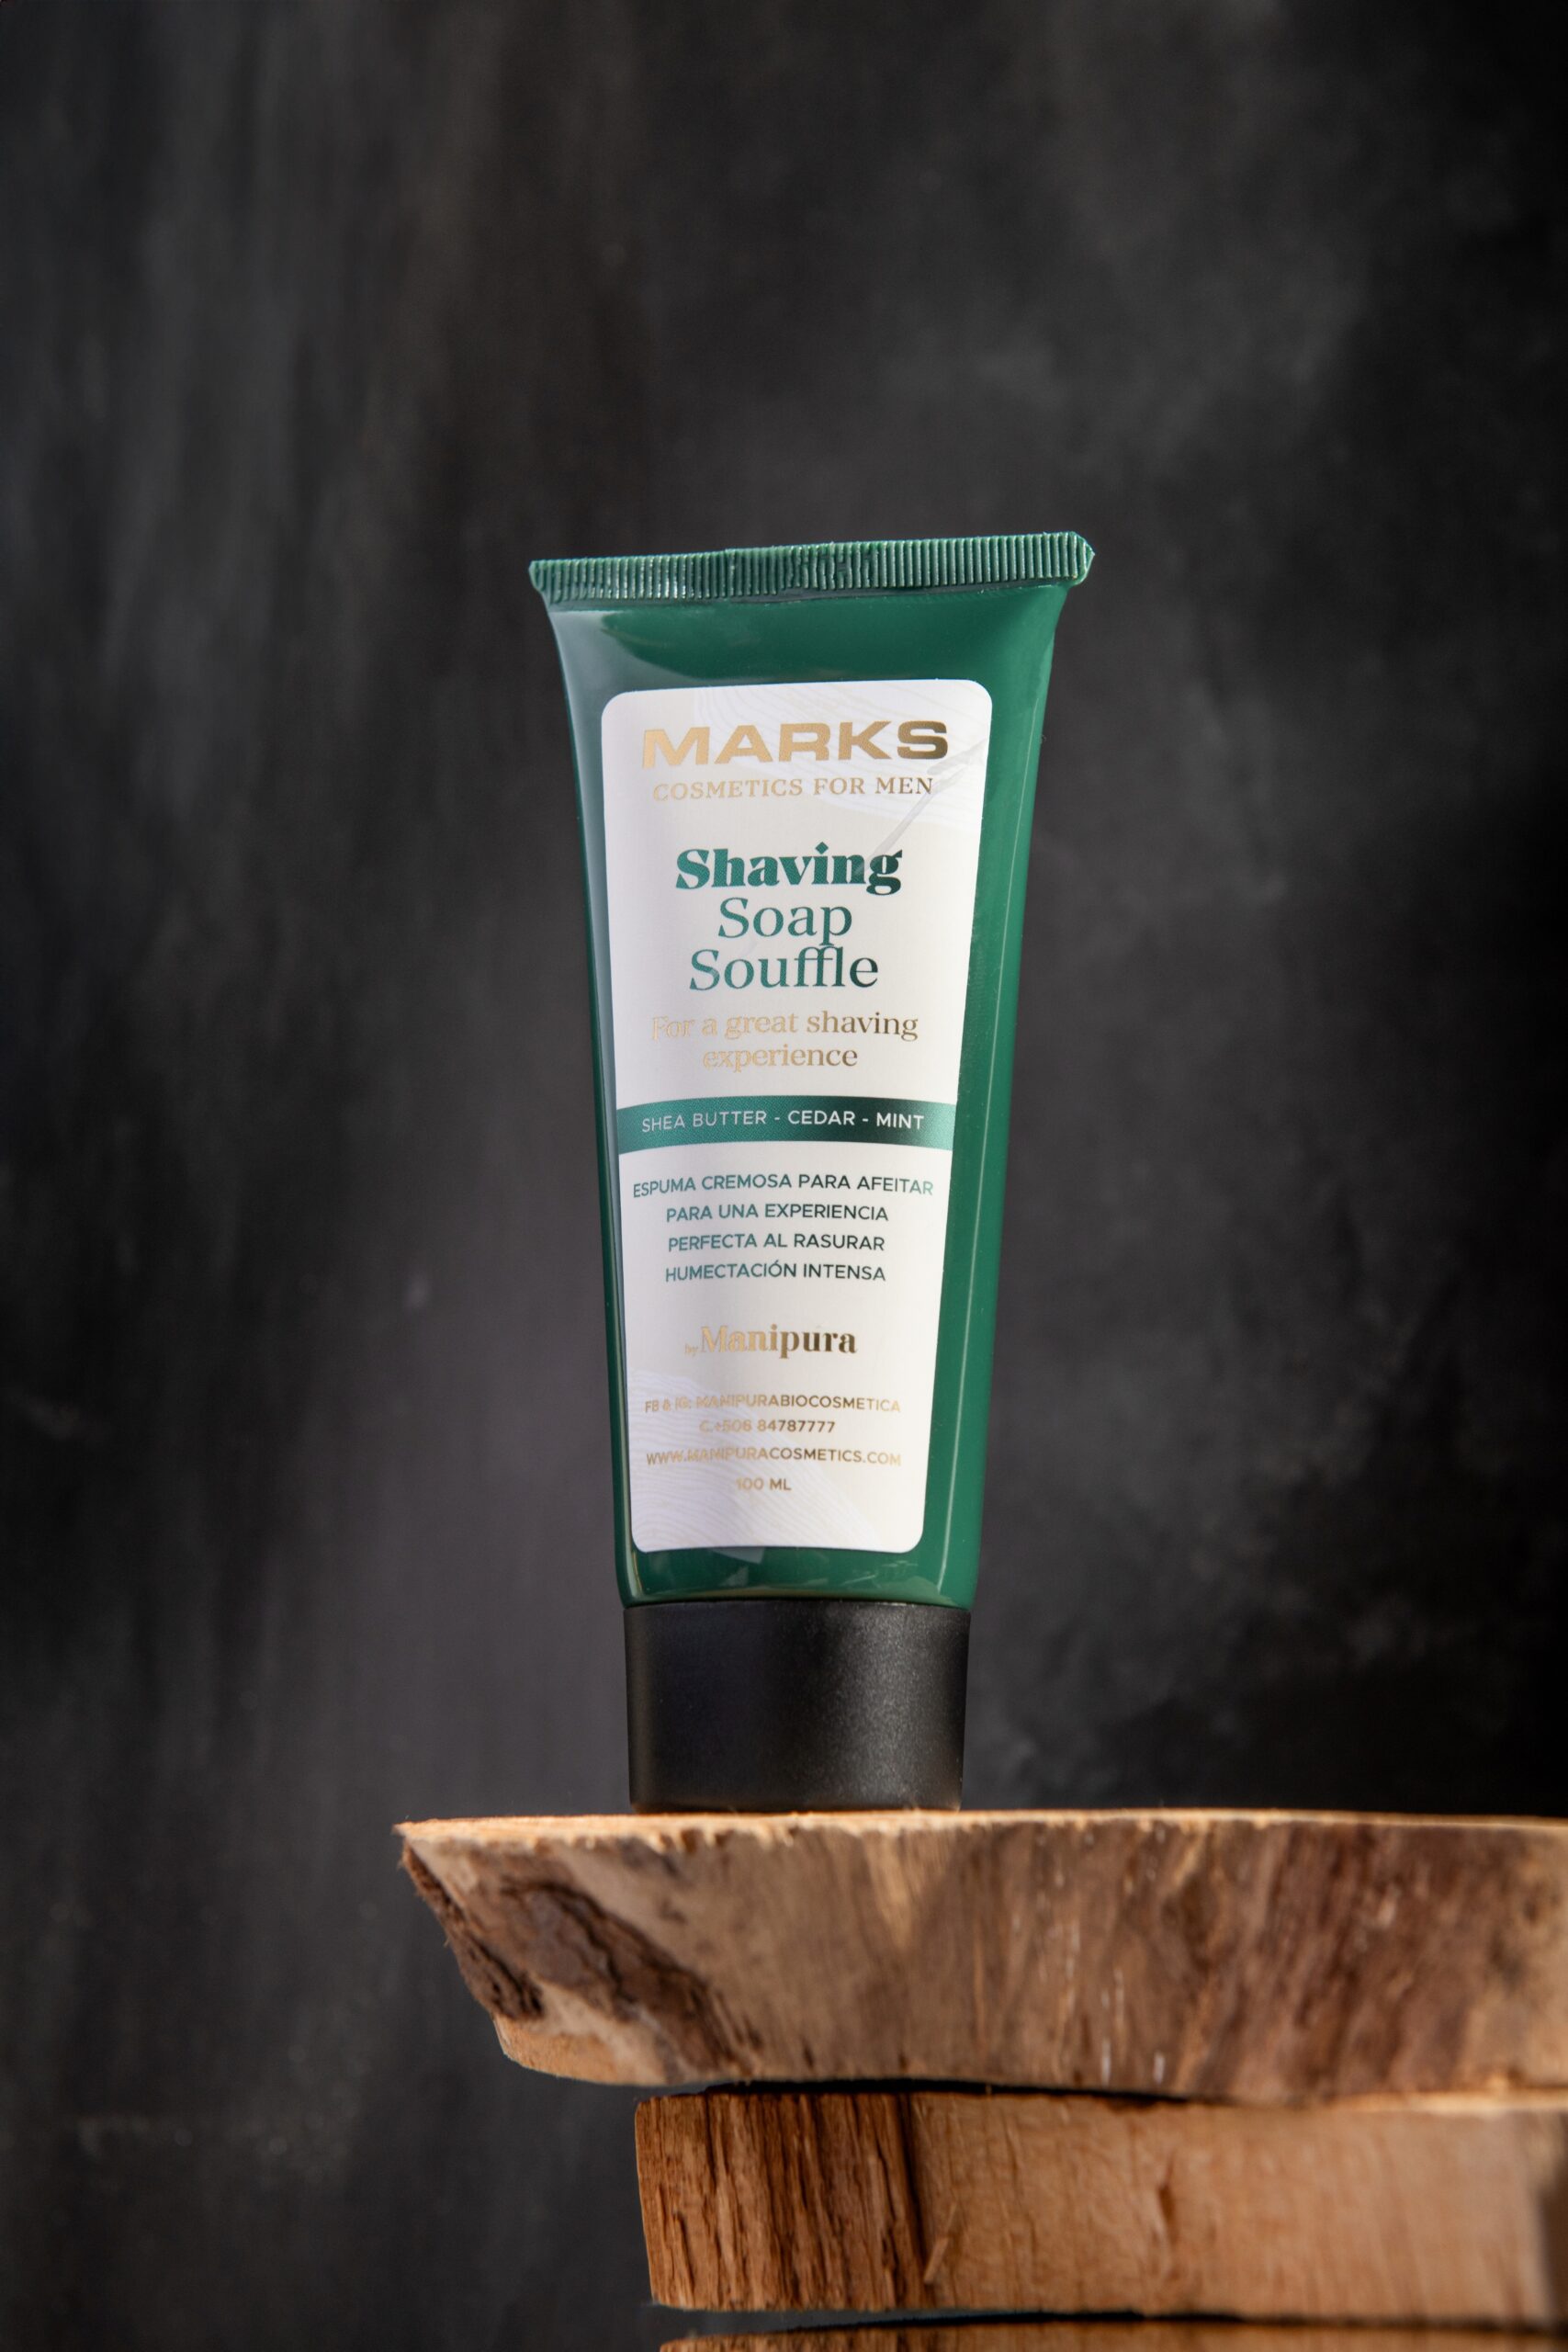 Manipura Cosmetica Natural https://manipuracosmetics.com/product/shaving-soap-souffle-marks/